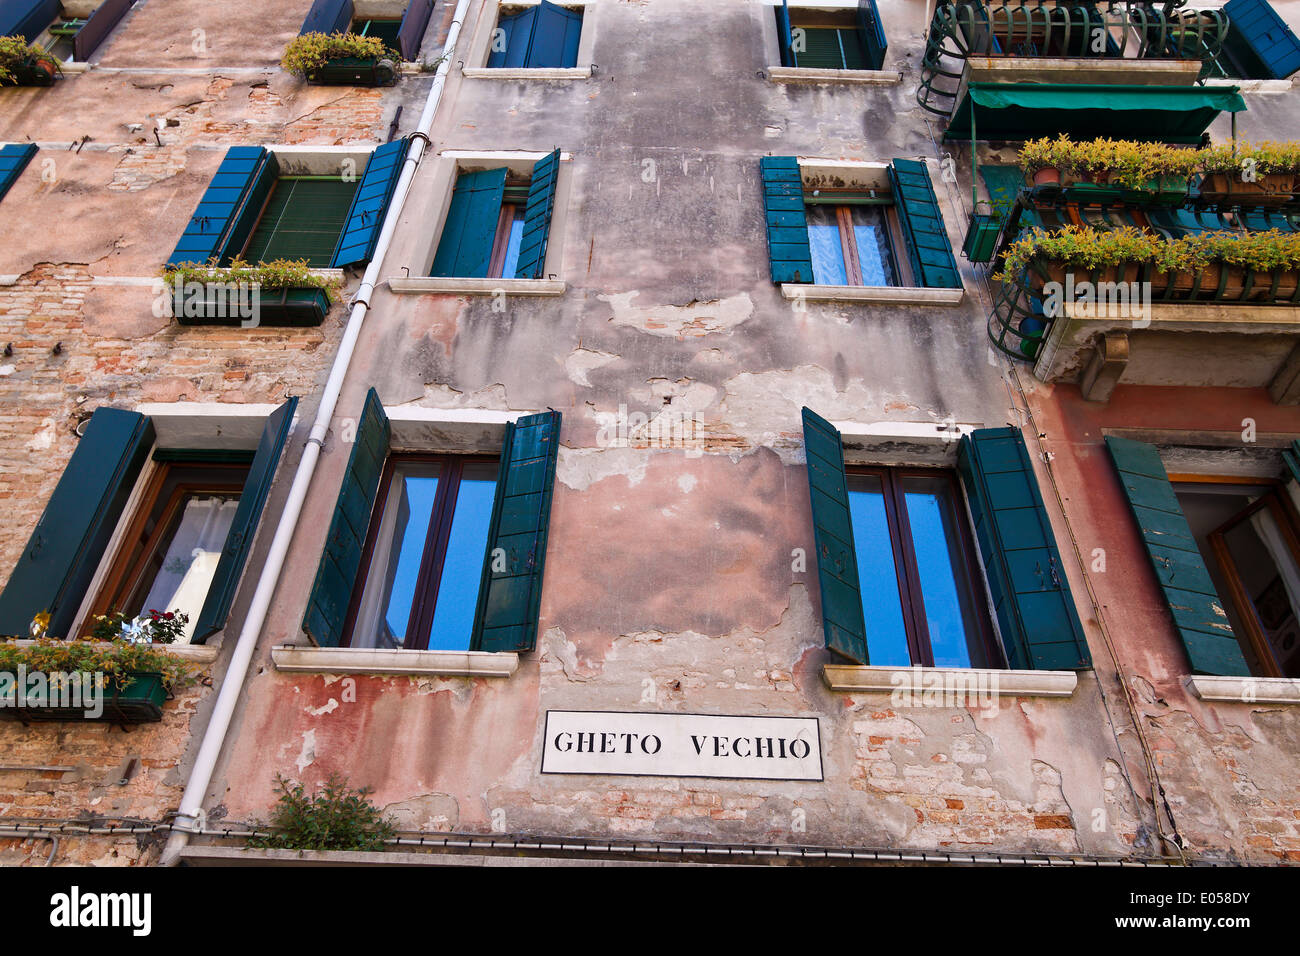 The worth seeing city of Venice in Italy. Jew's quarter ghetto, Die sehenswerte Stadt Venedig in Italien. Judenviertel Ghetto Stock Photo